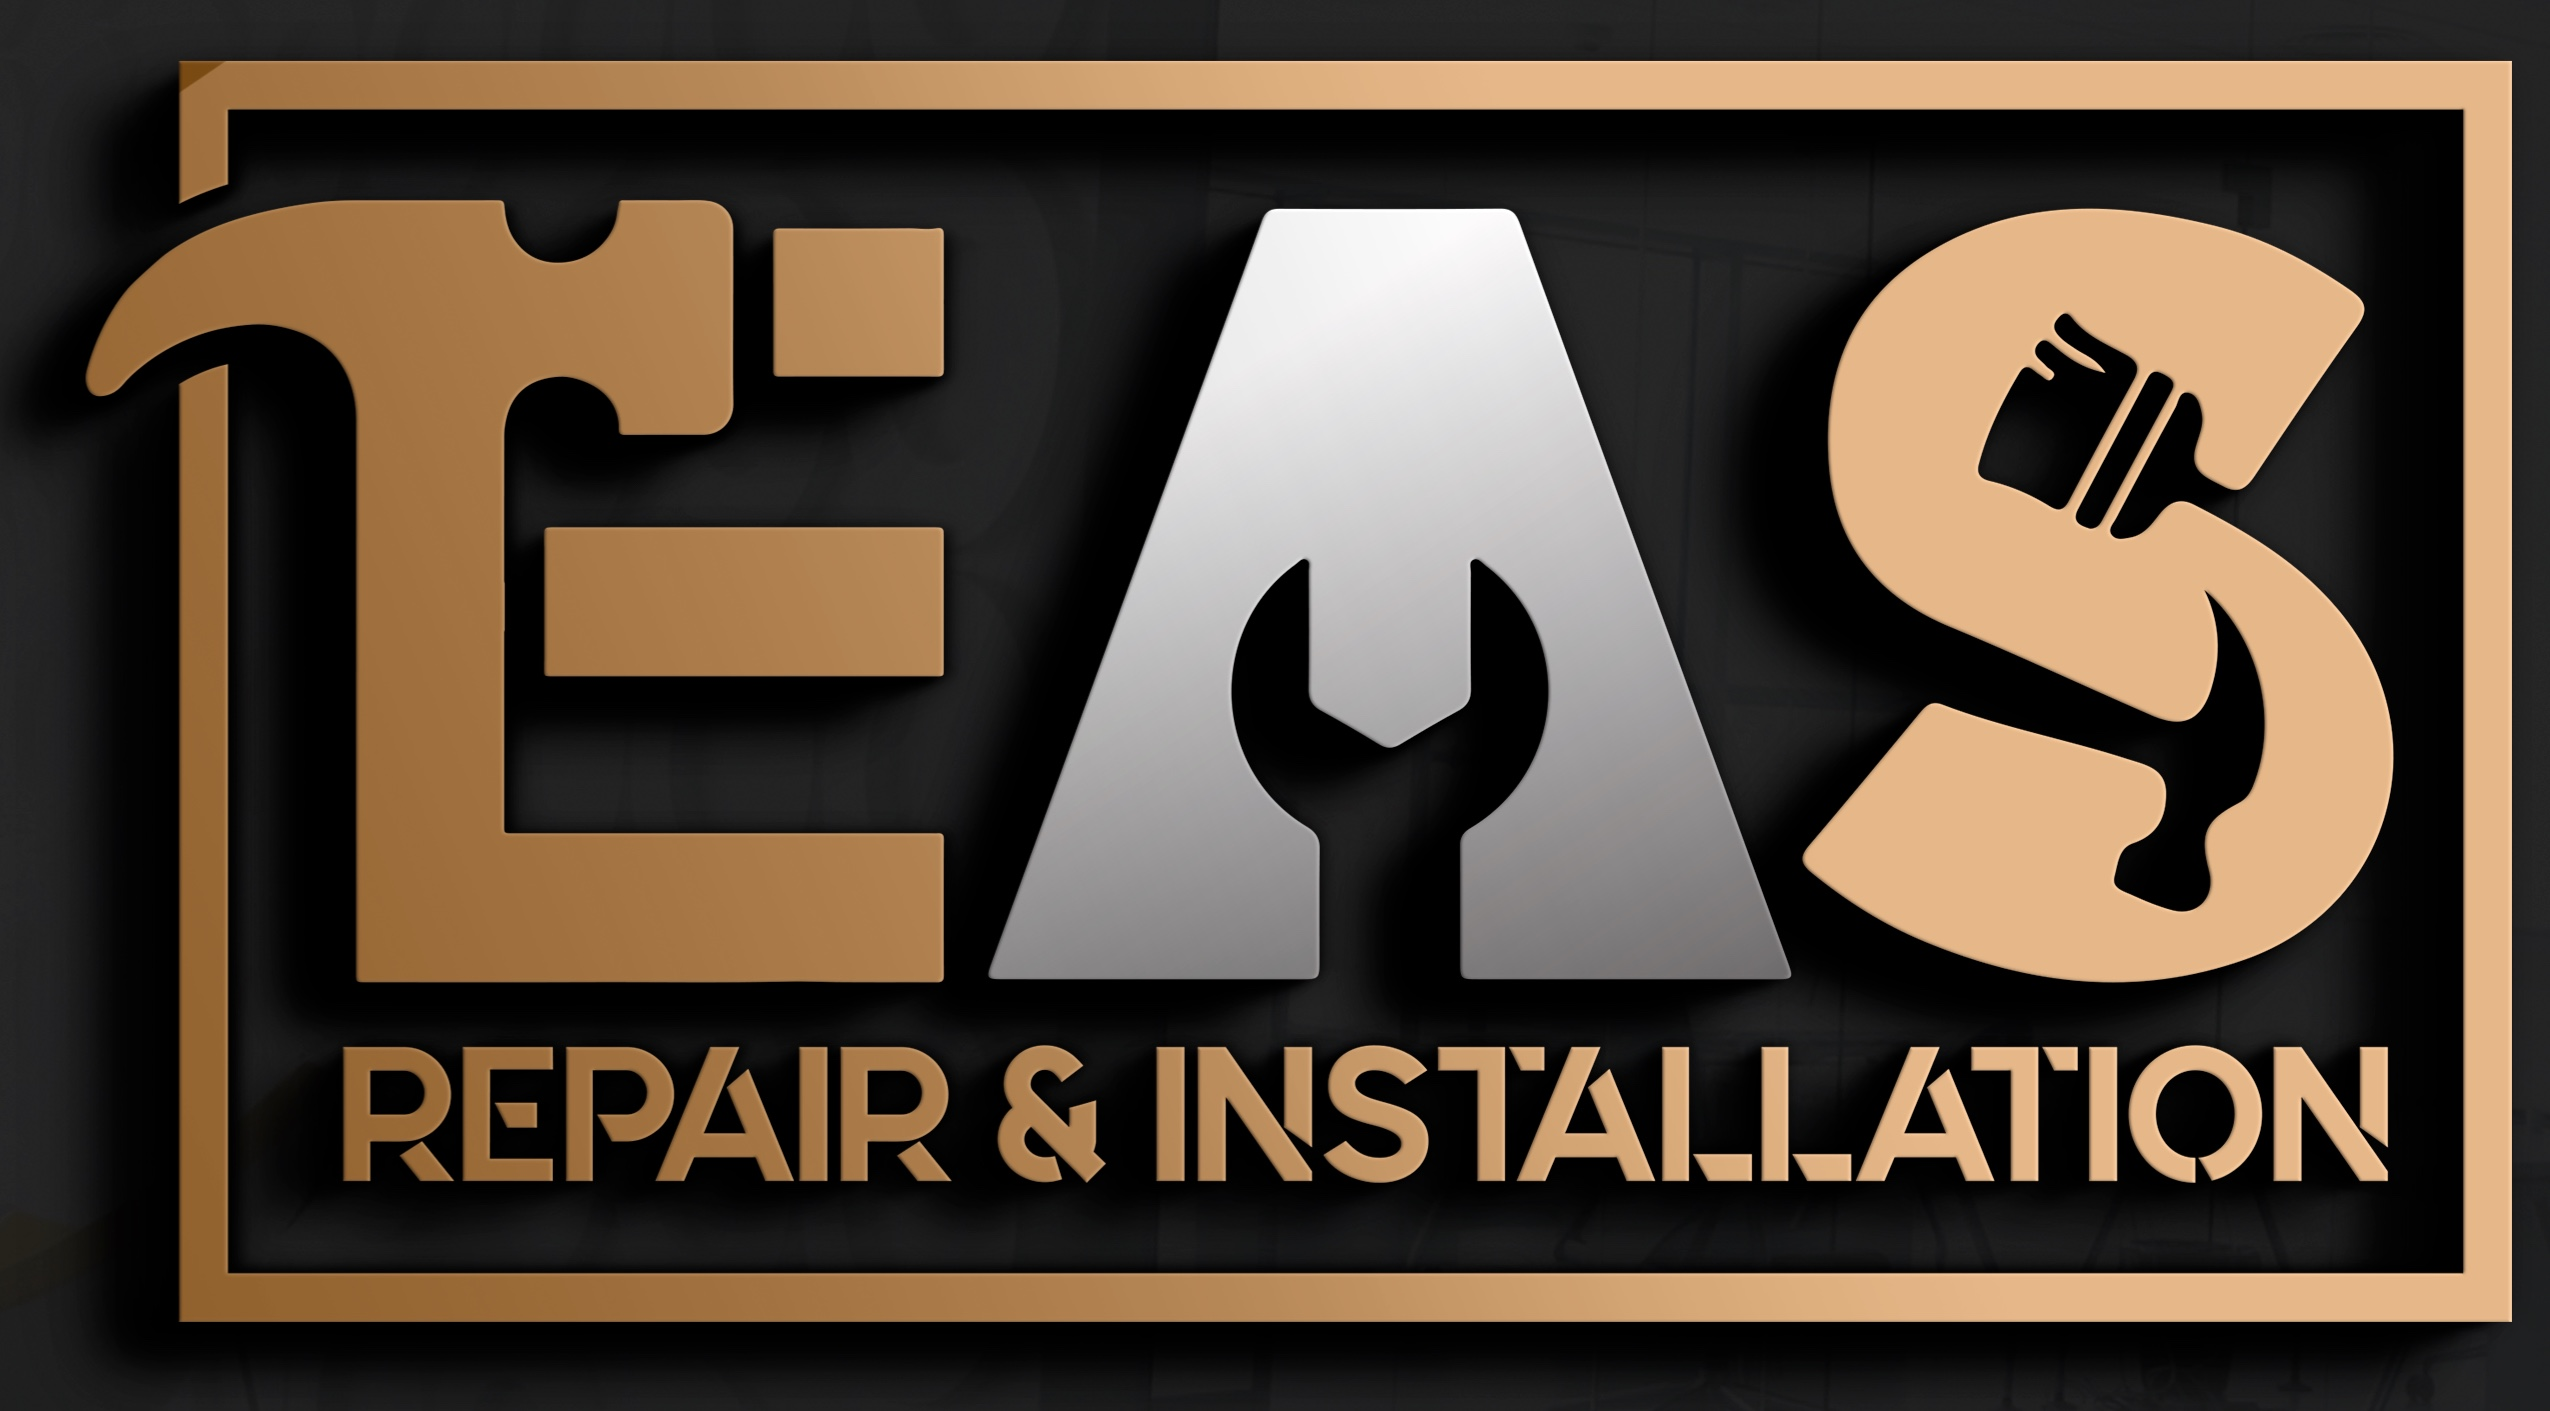 EAS Repair & Installation's logo